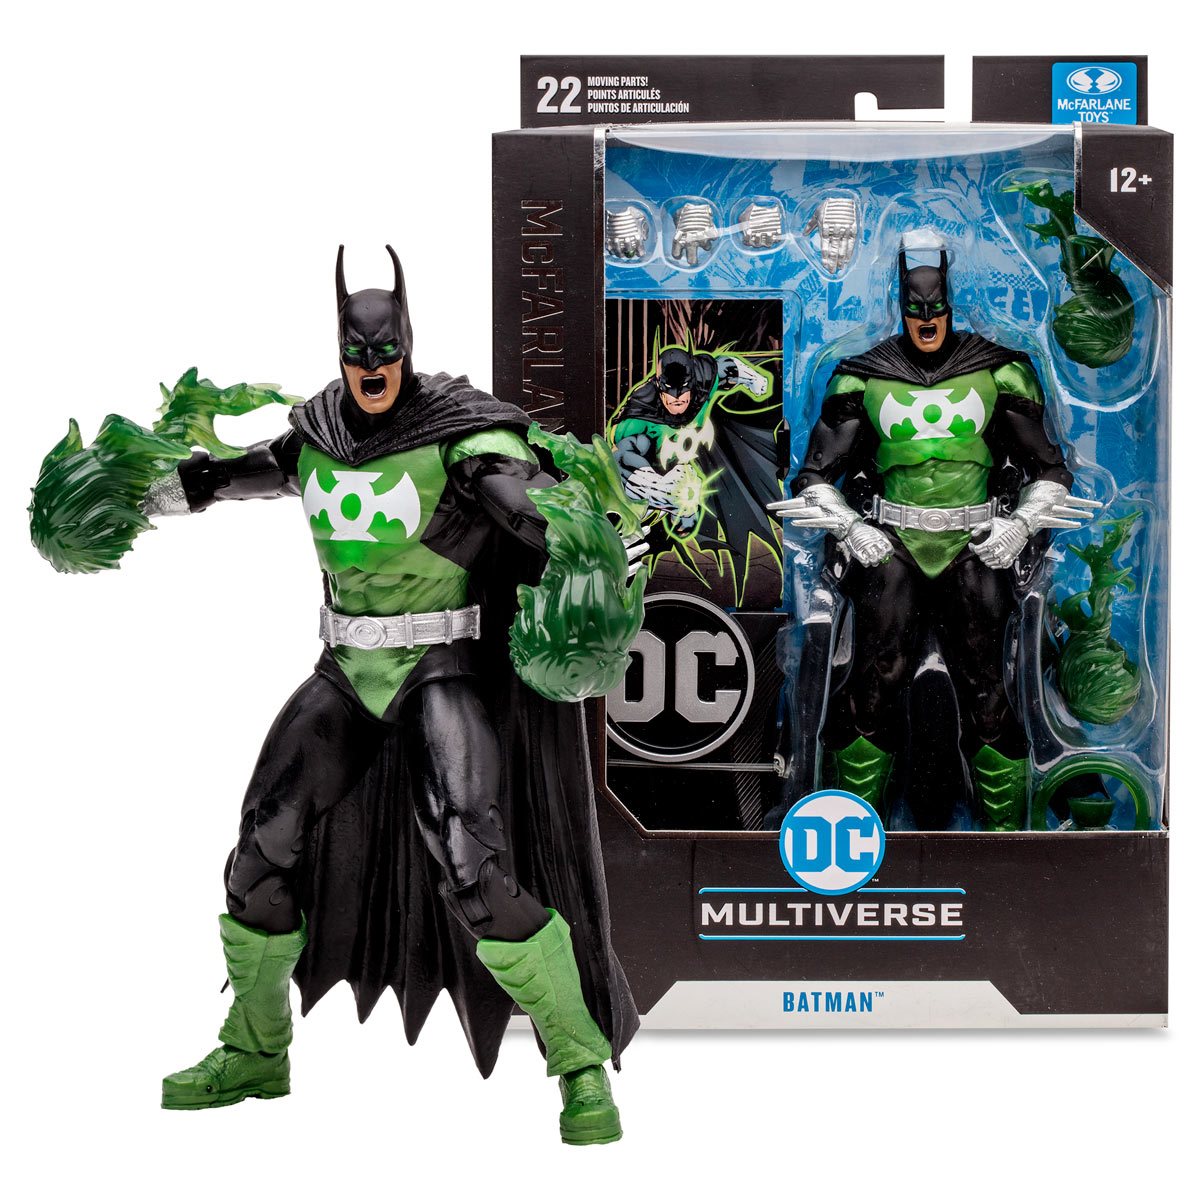 DC McFarlane Collector Edition Wave 3 Batman as Green Lantern